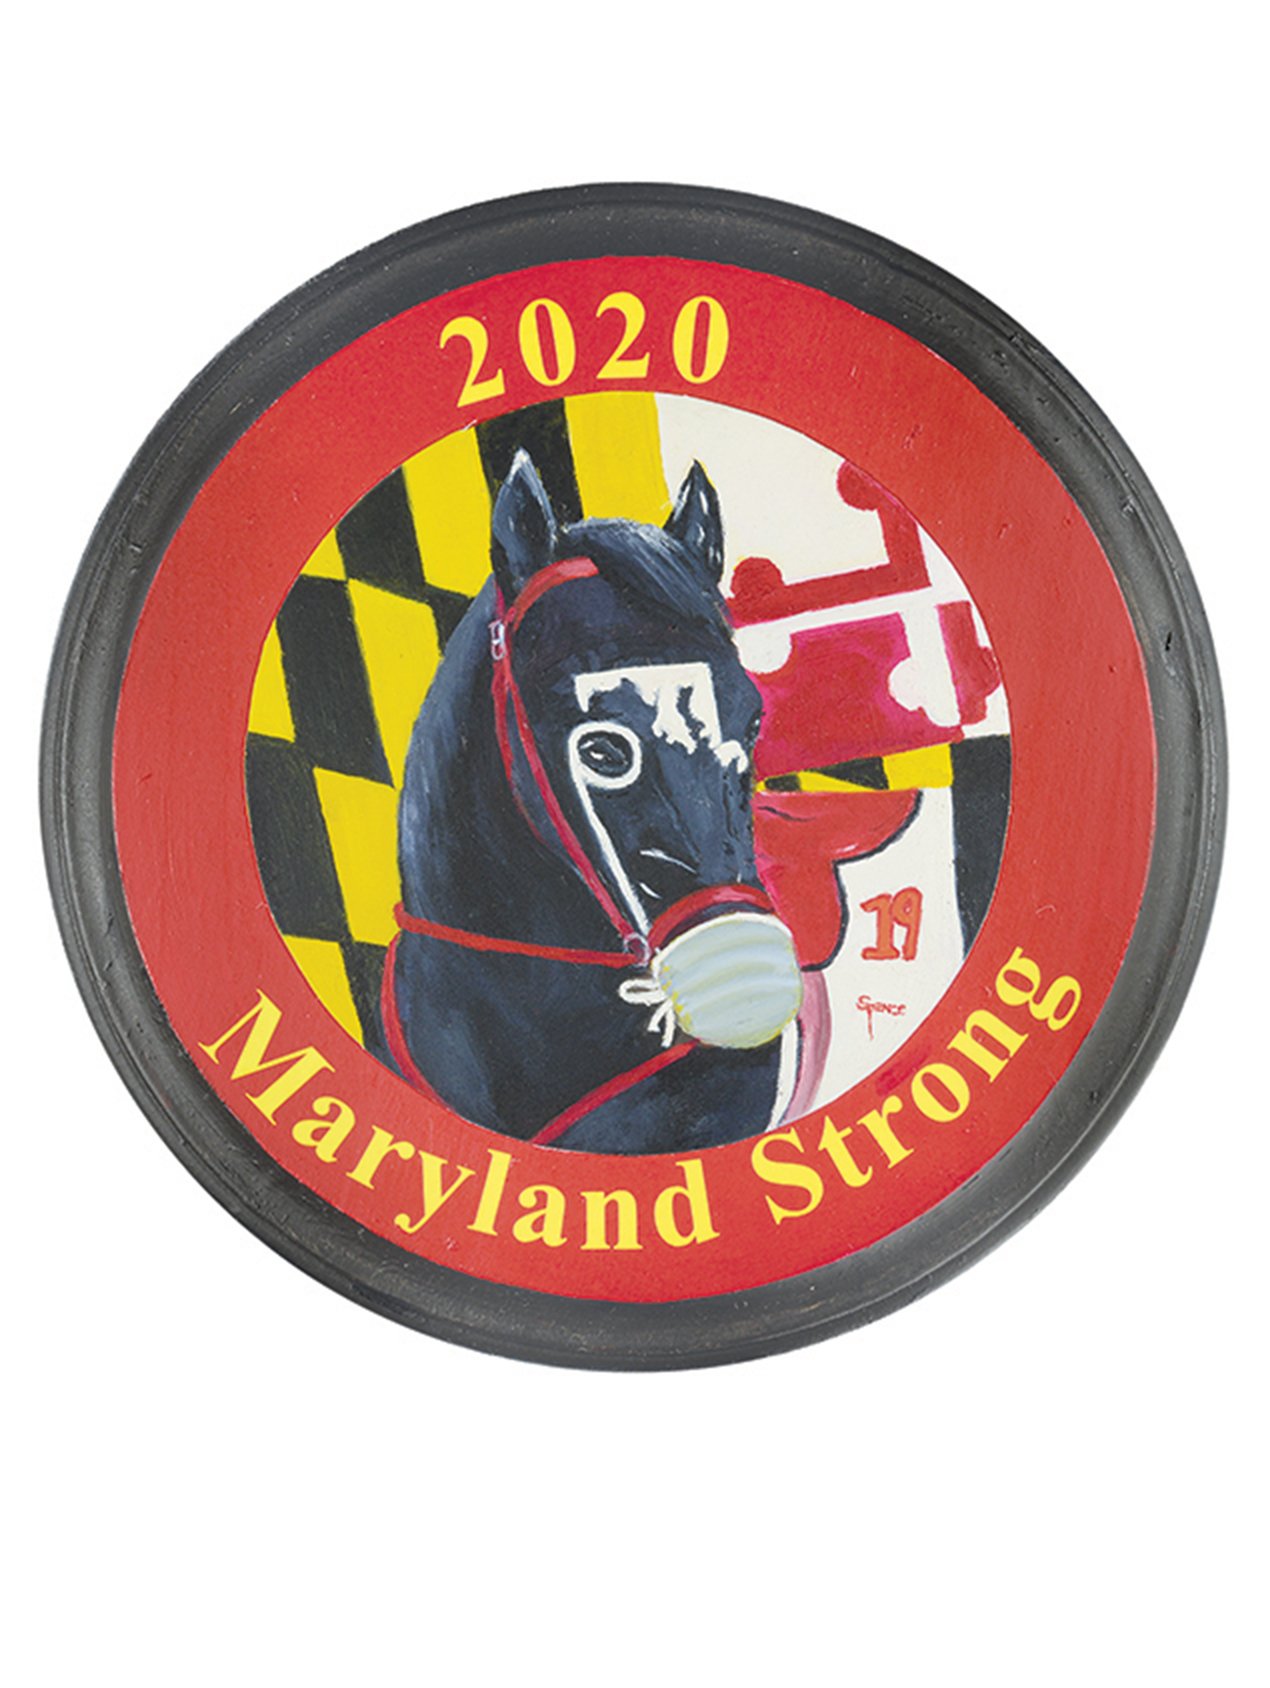 Maryland Strong Mounted.jpg